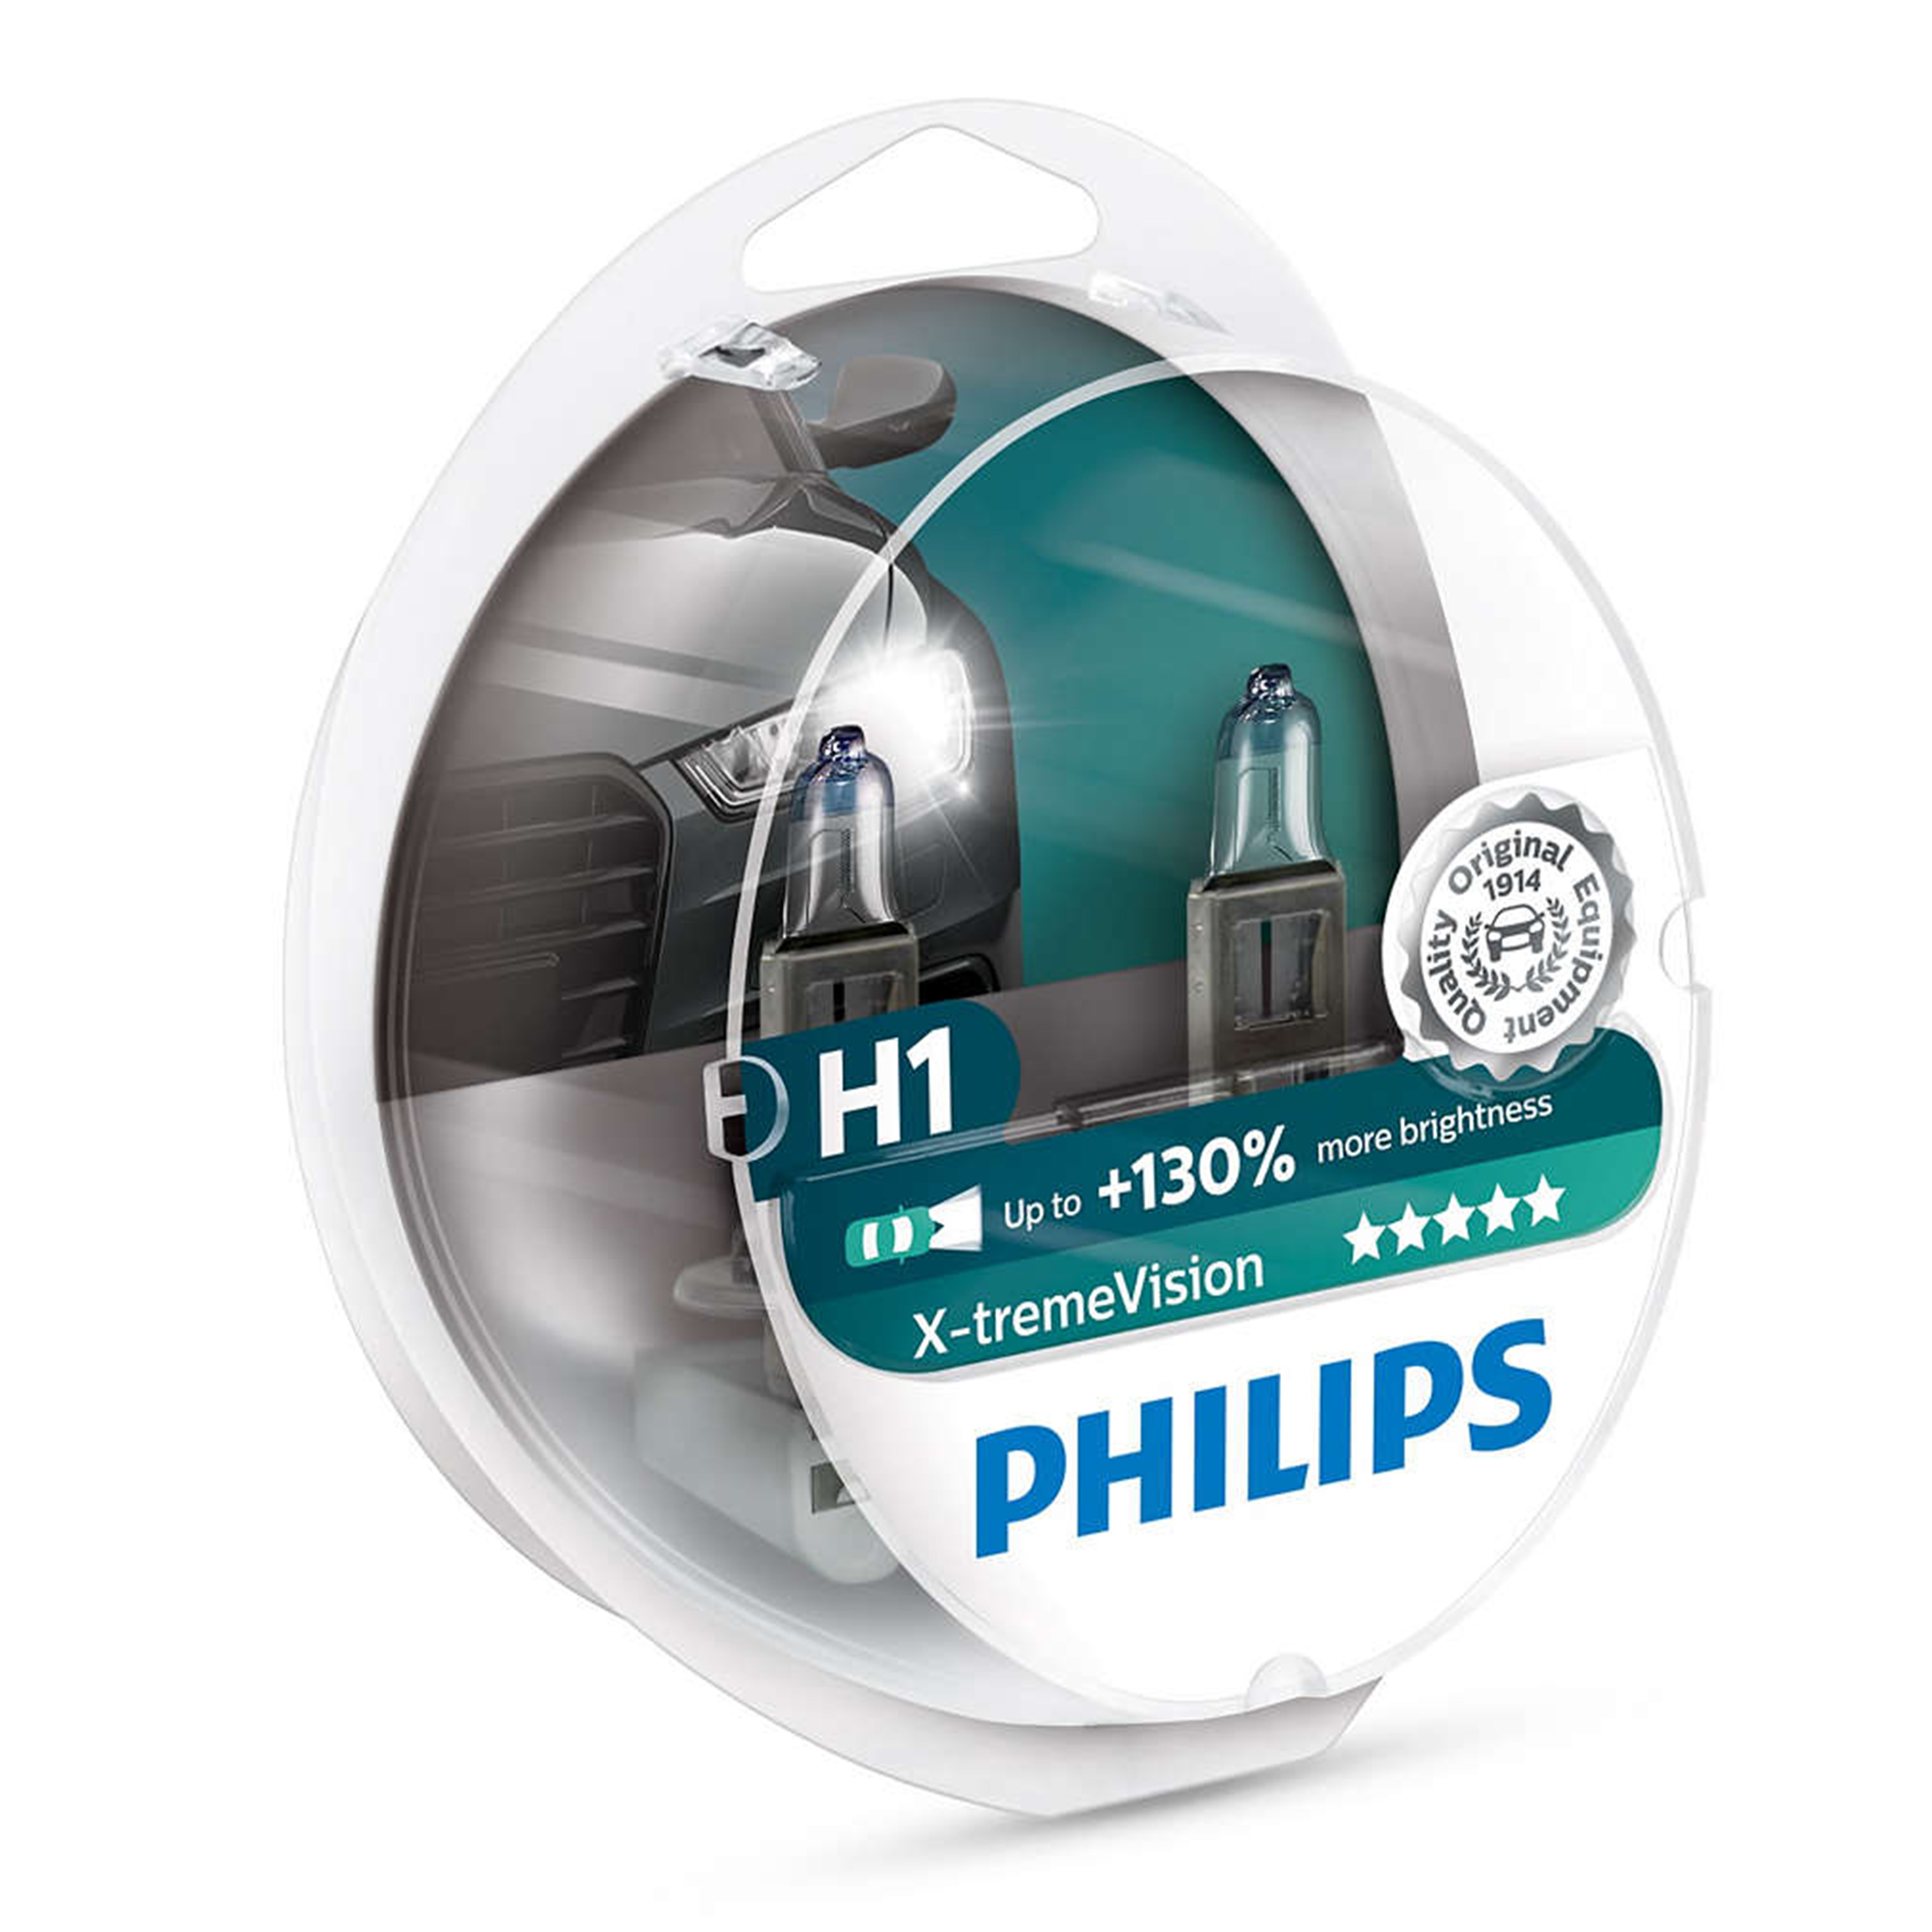 Филипс вижн. Филипс h7 +130. Philips x-treme Vision h7. Philips x-TREMEVISION +130% h4. Лампа h4 Philips Xtreme Vision +130.